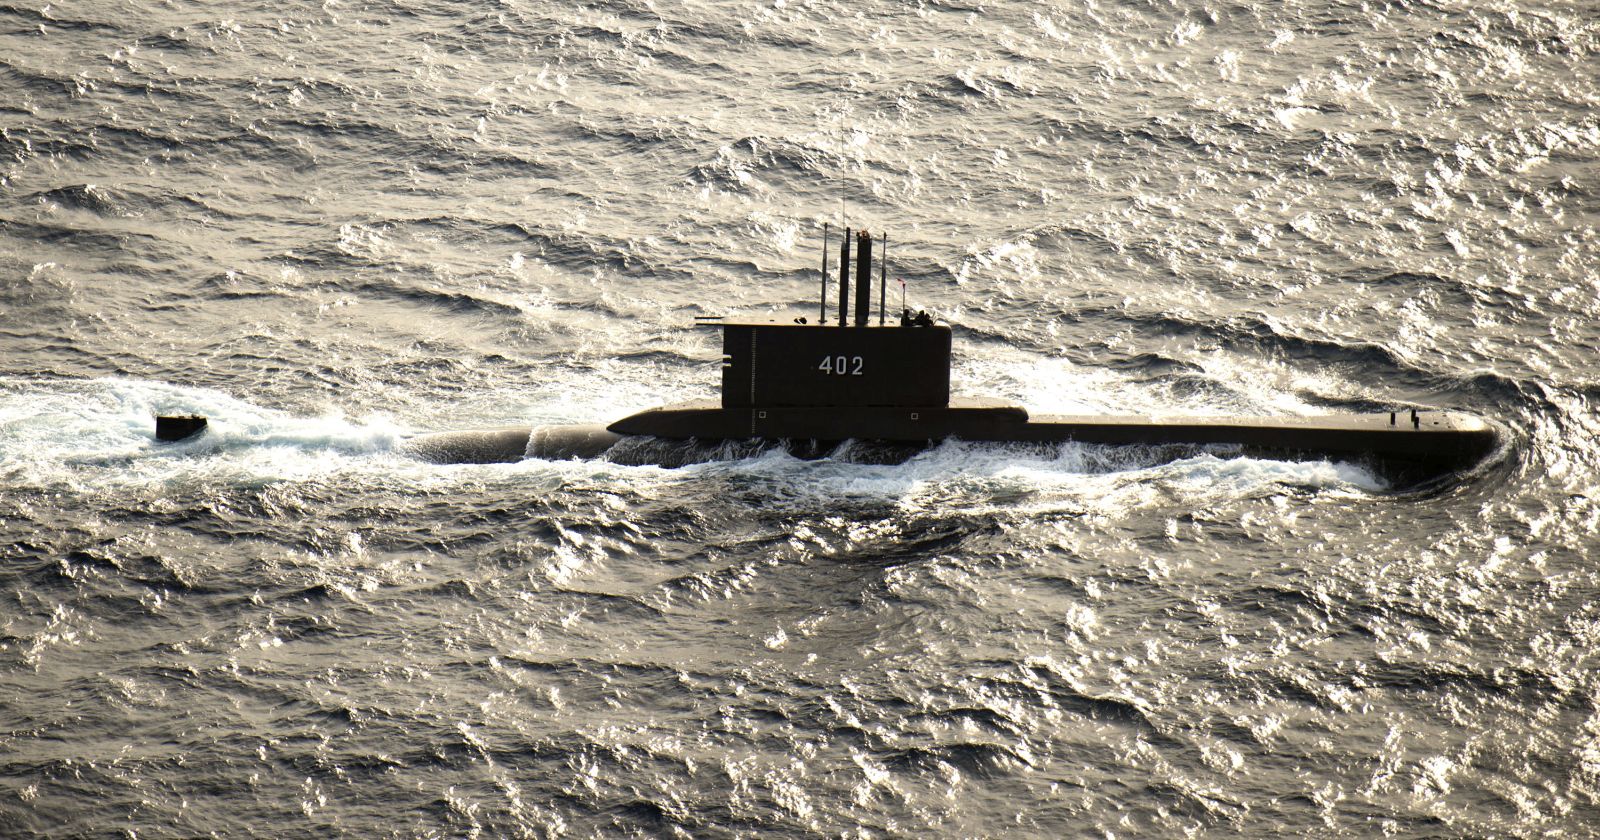 Indonesia submarino